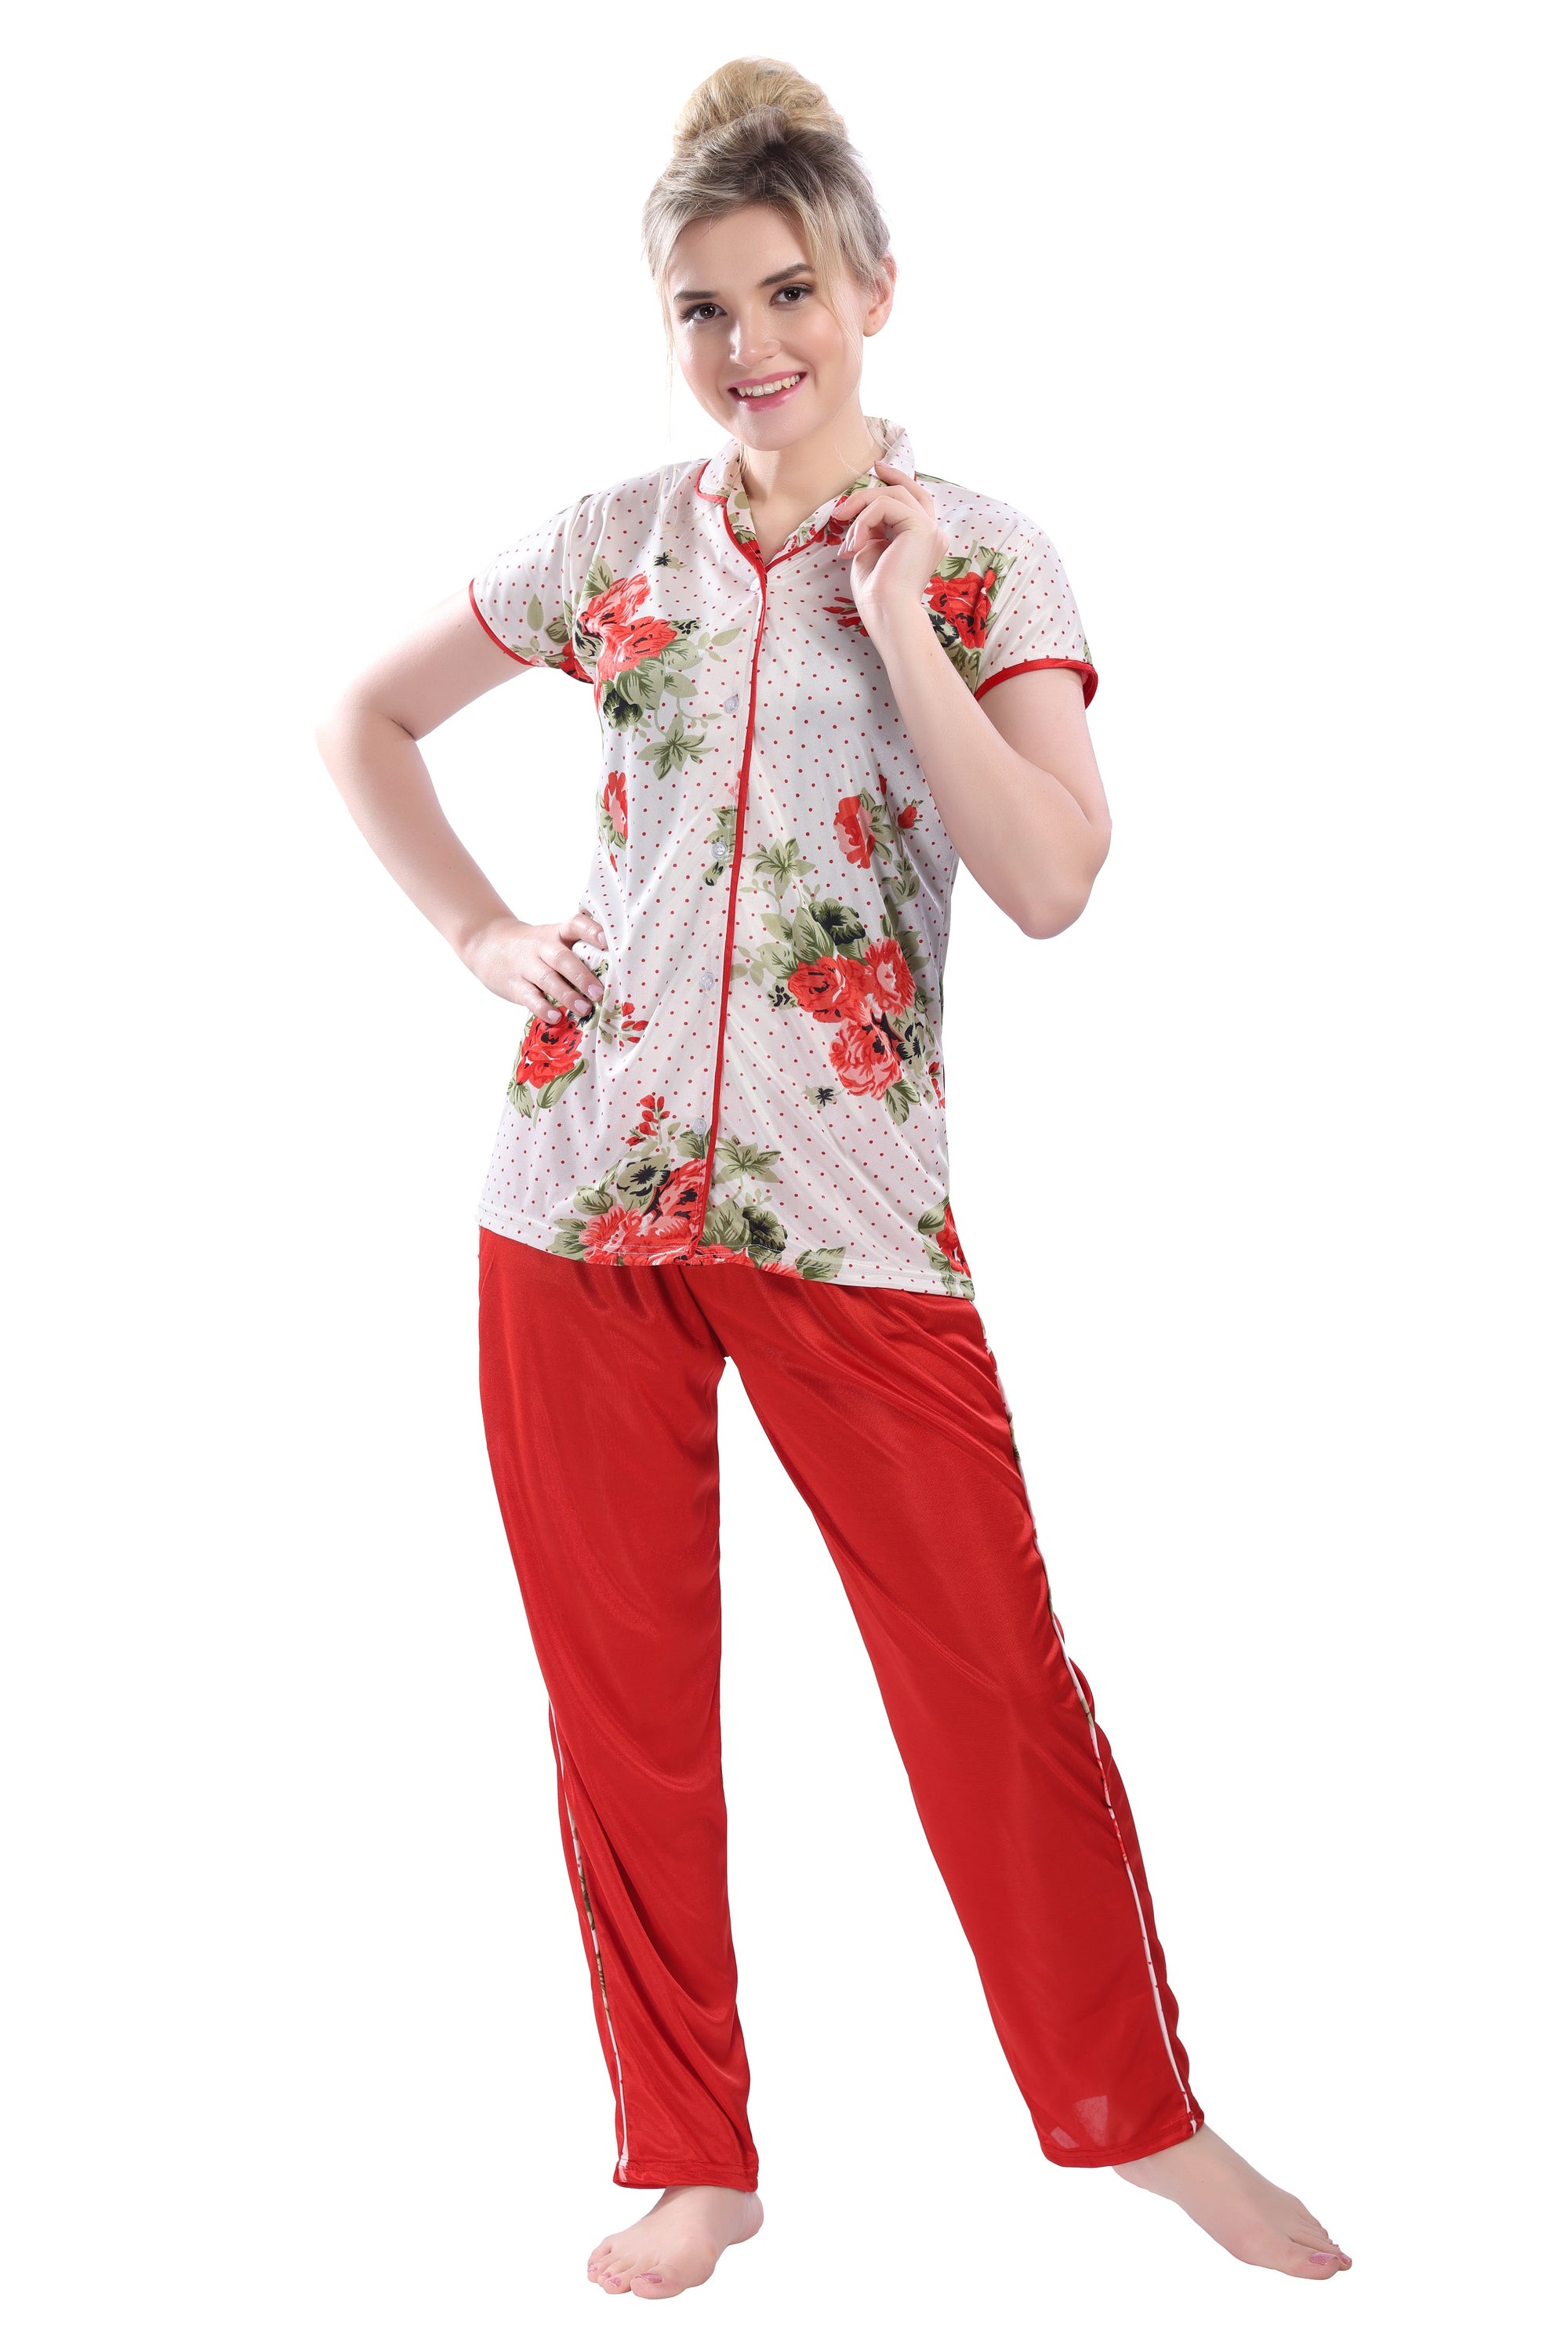 Style Dunes Printed Night Suit for Women - Flower Print Satin Shirt and Pyjama Set (Front Open Collar Night Suit) - Wowxop